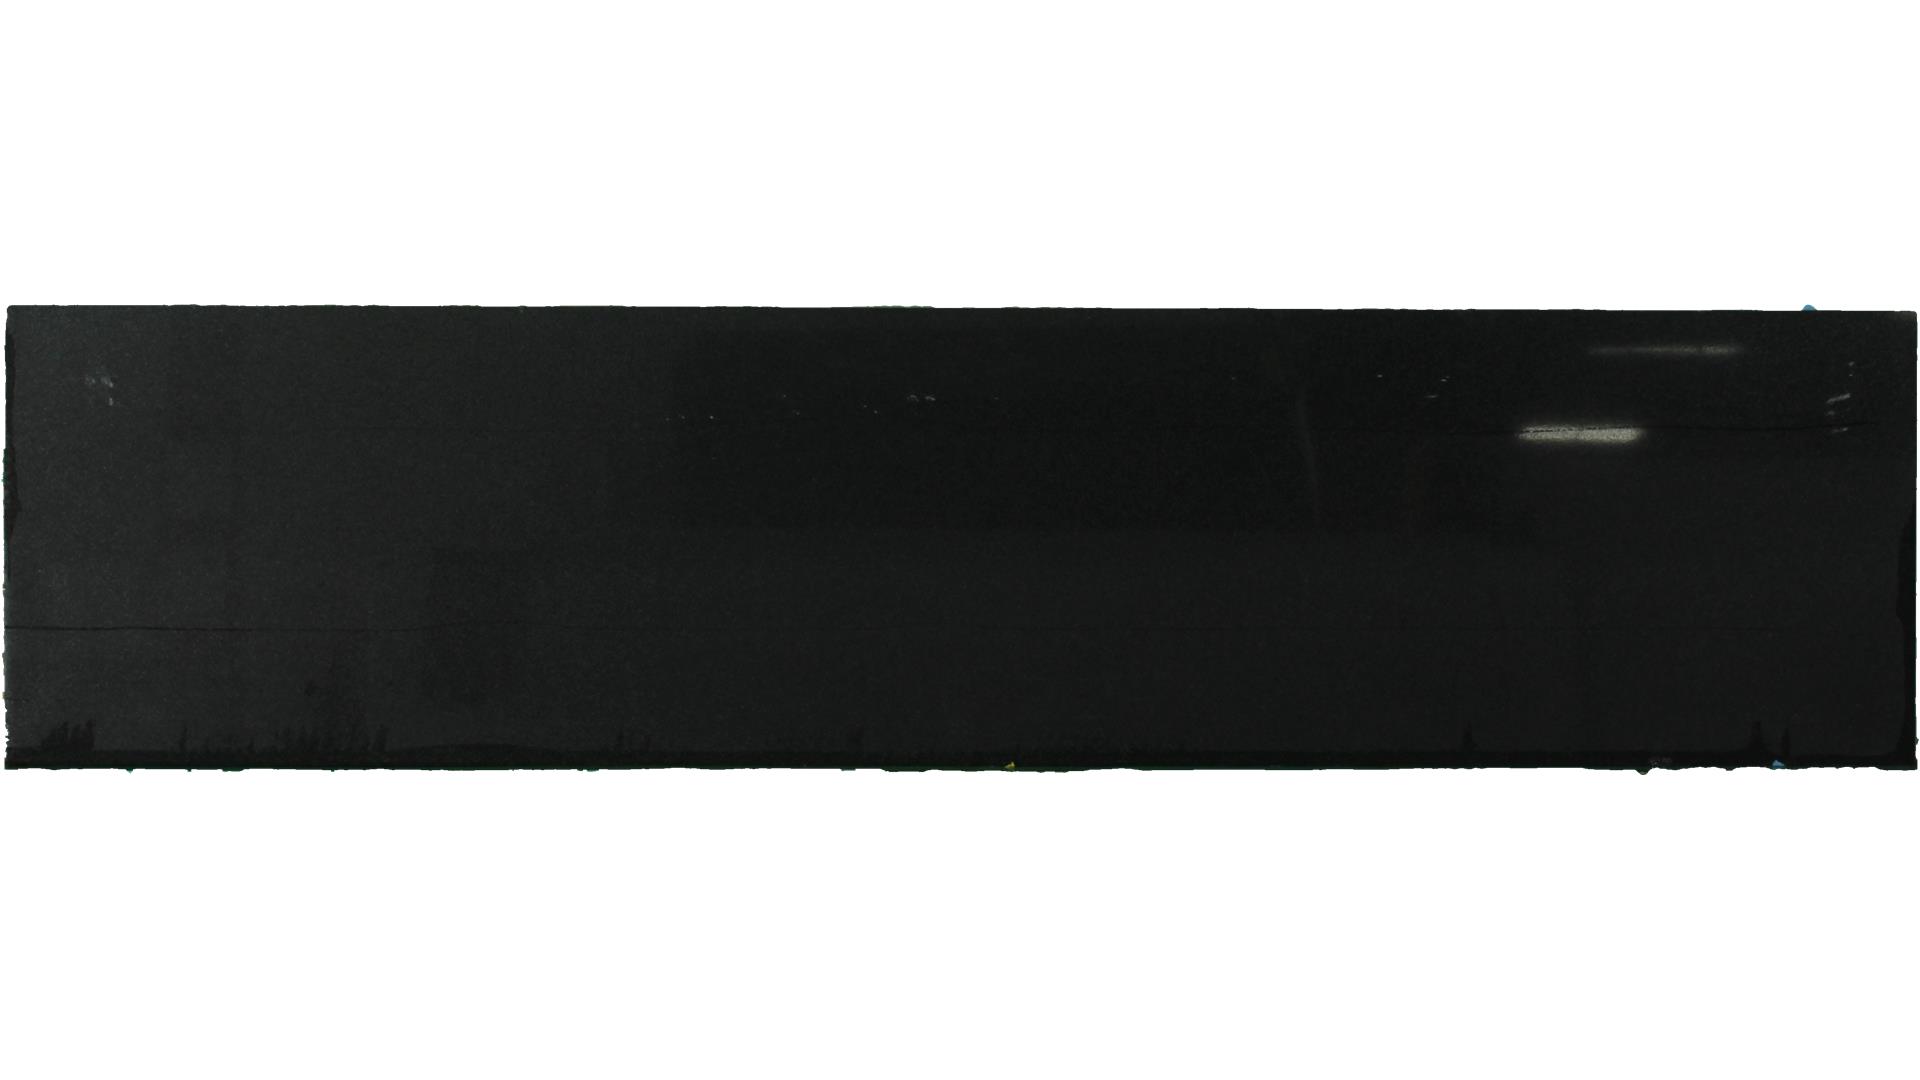 Absolute Black 3 cm DalTile Natural Stone Slabs